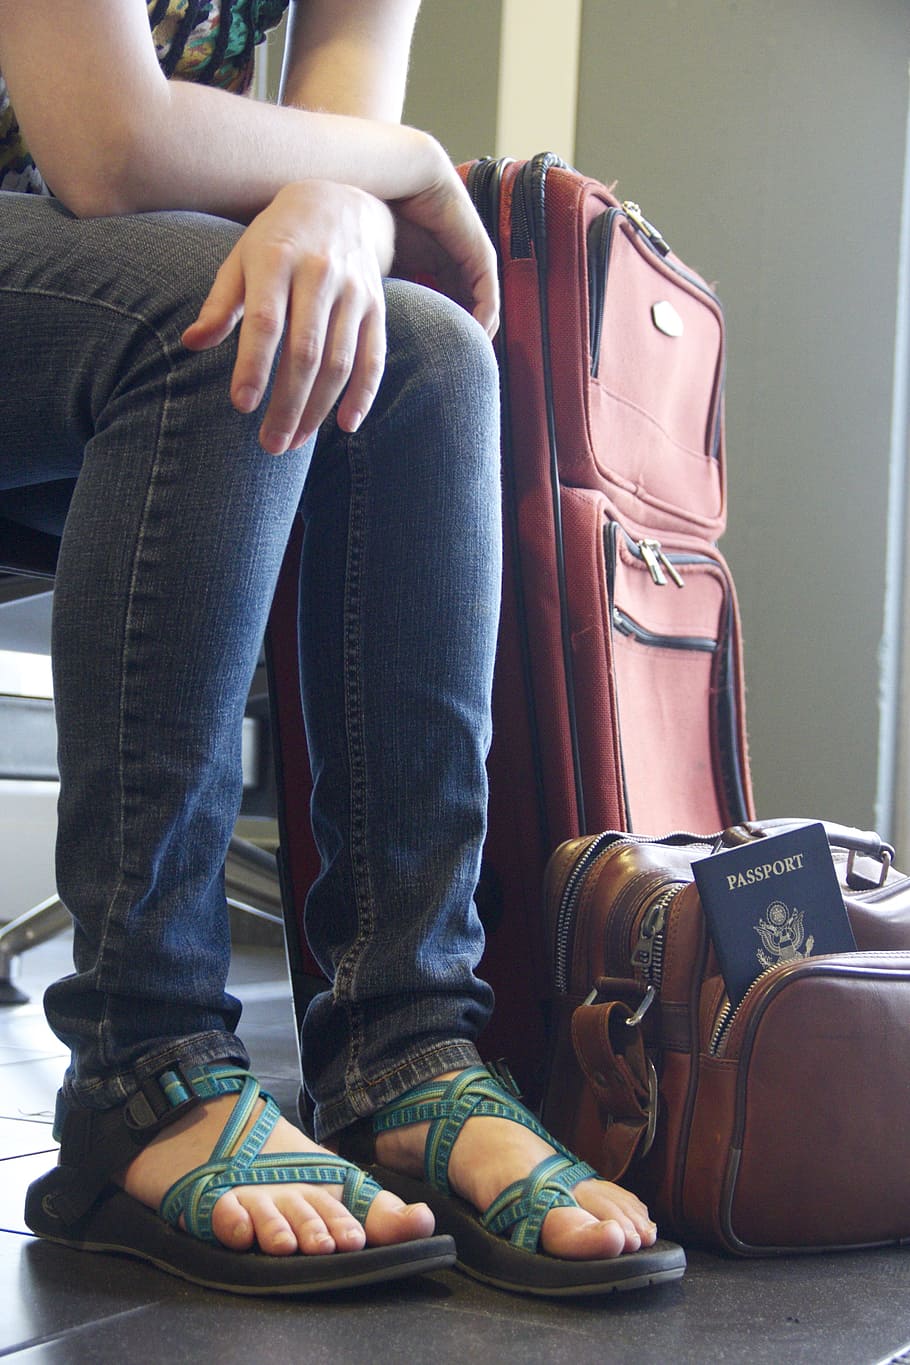 person, sitting, chair, travel luggage, travel, luggage, airport, waiting, passport, traveler